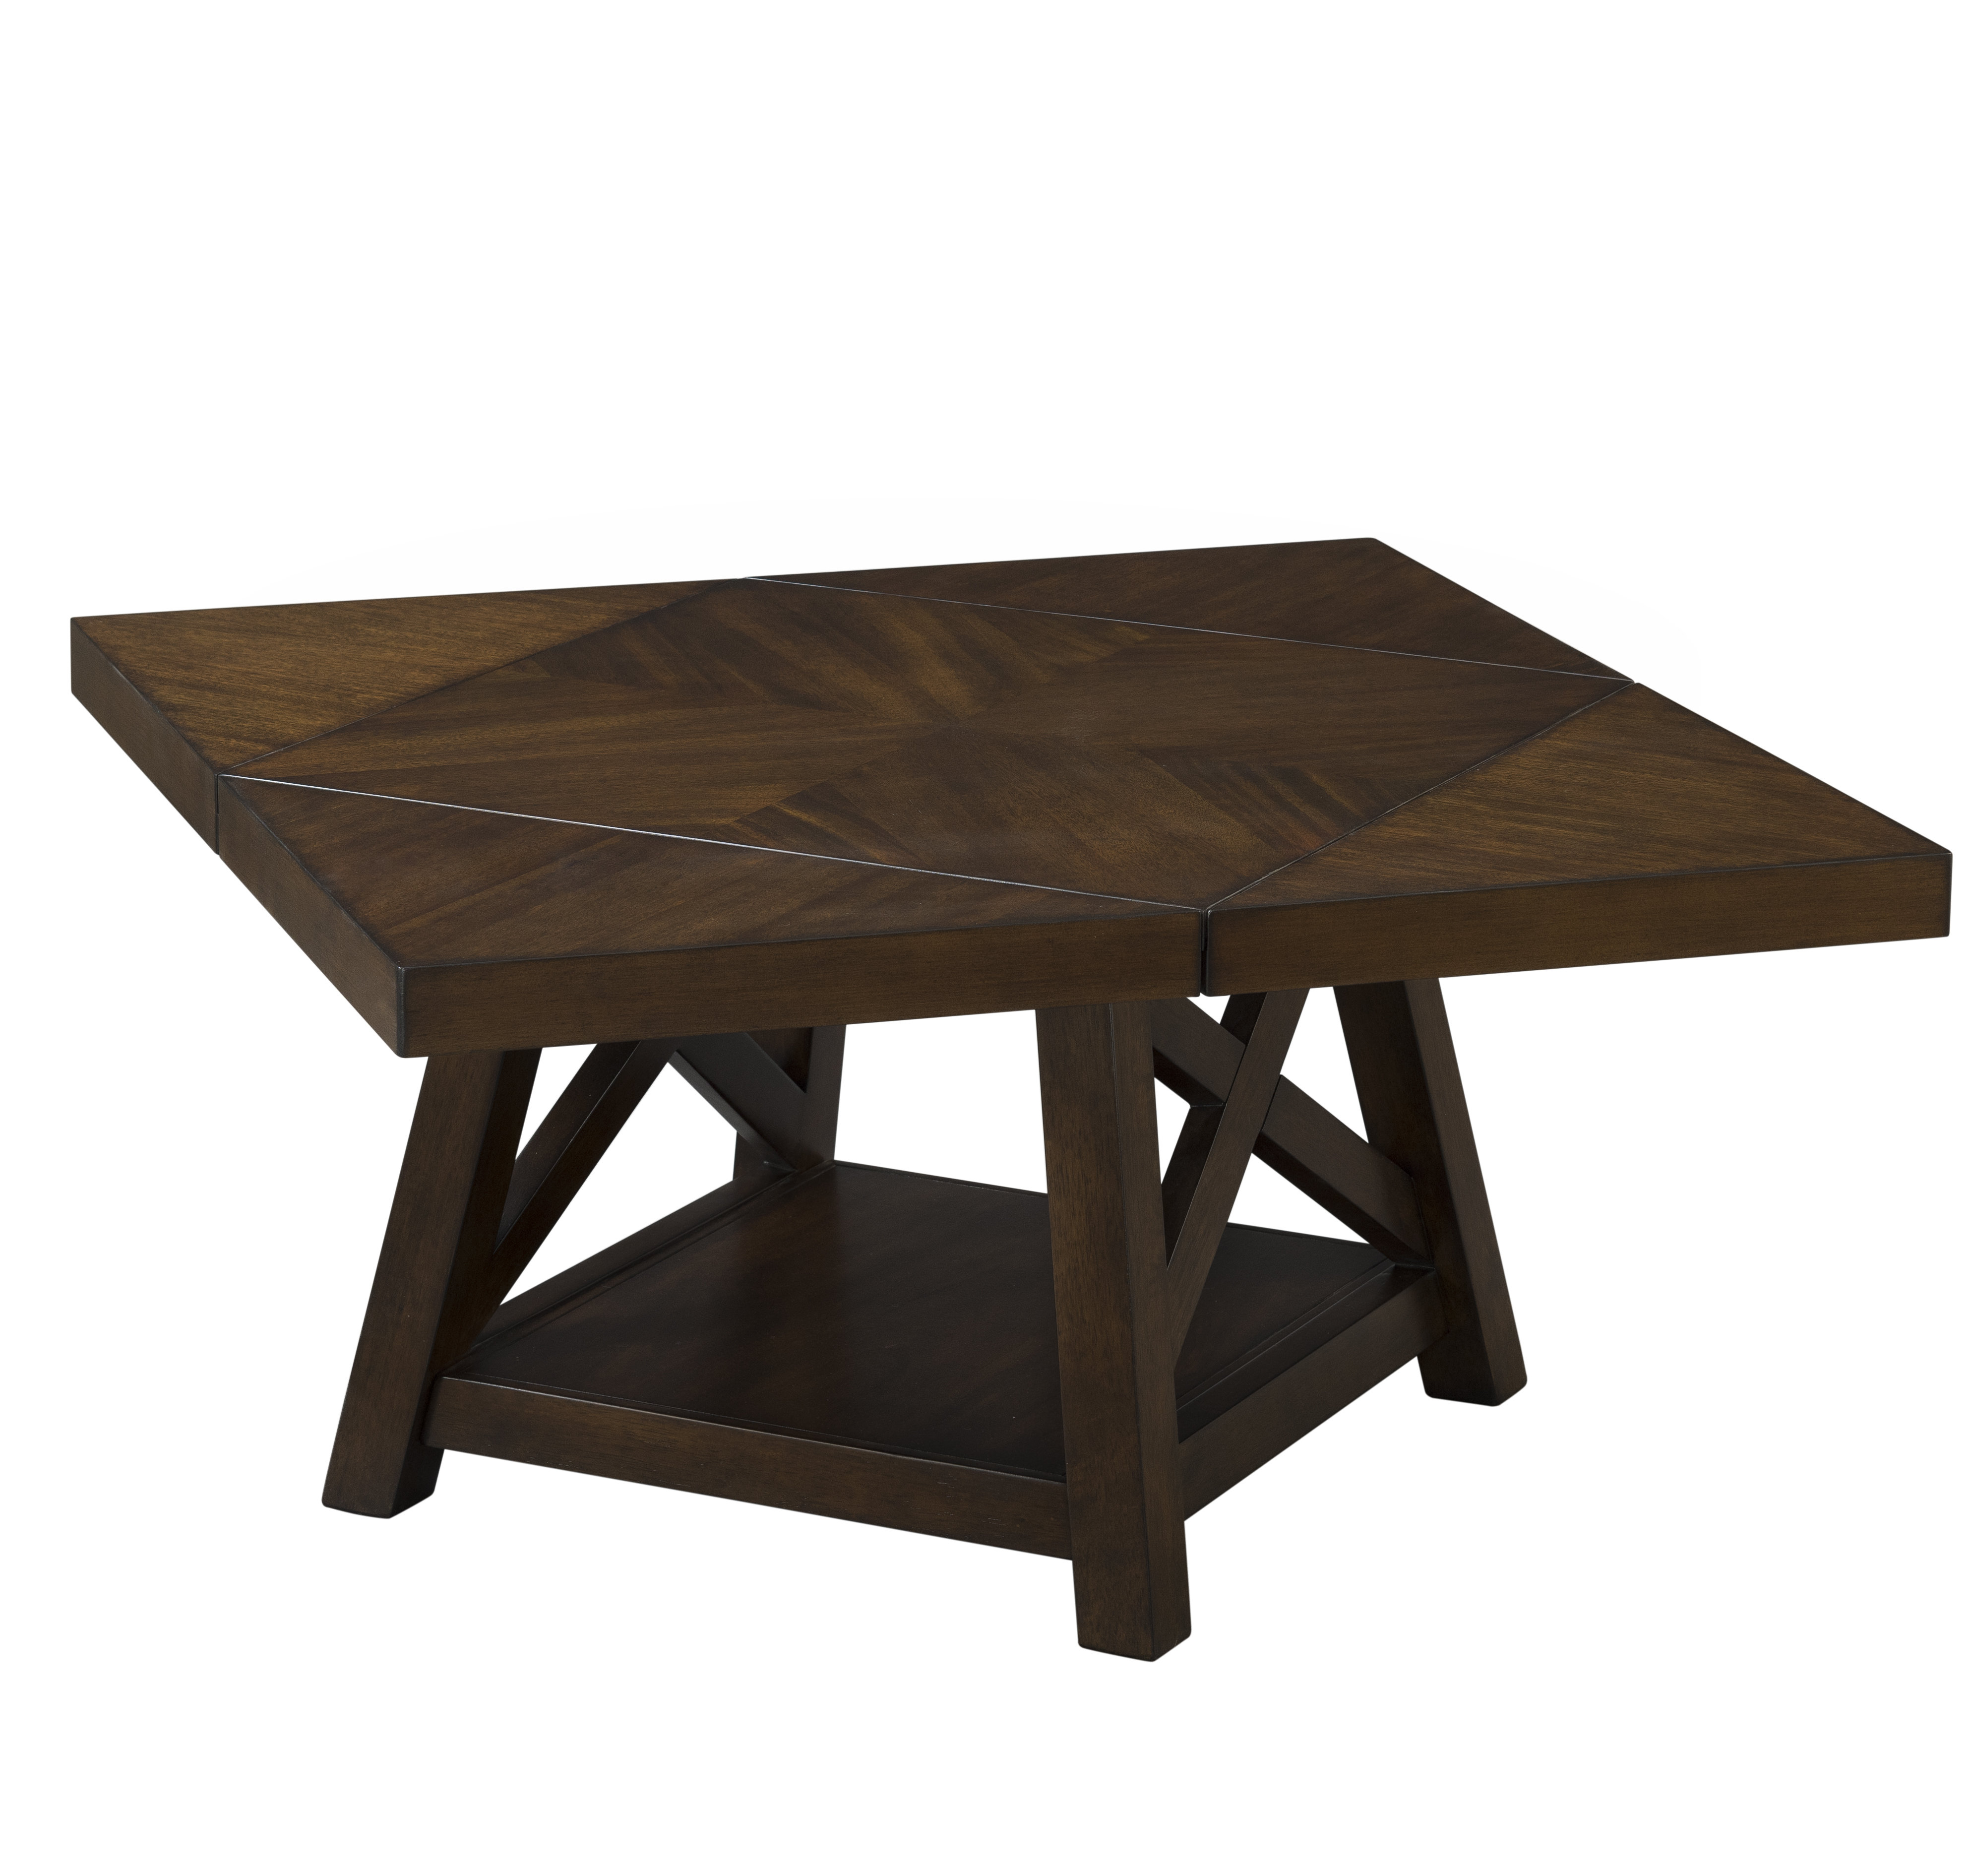 Gracie Oaks Scranton Flip Top Coffee Table Wayfair with sizing 3974 X 3782